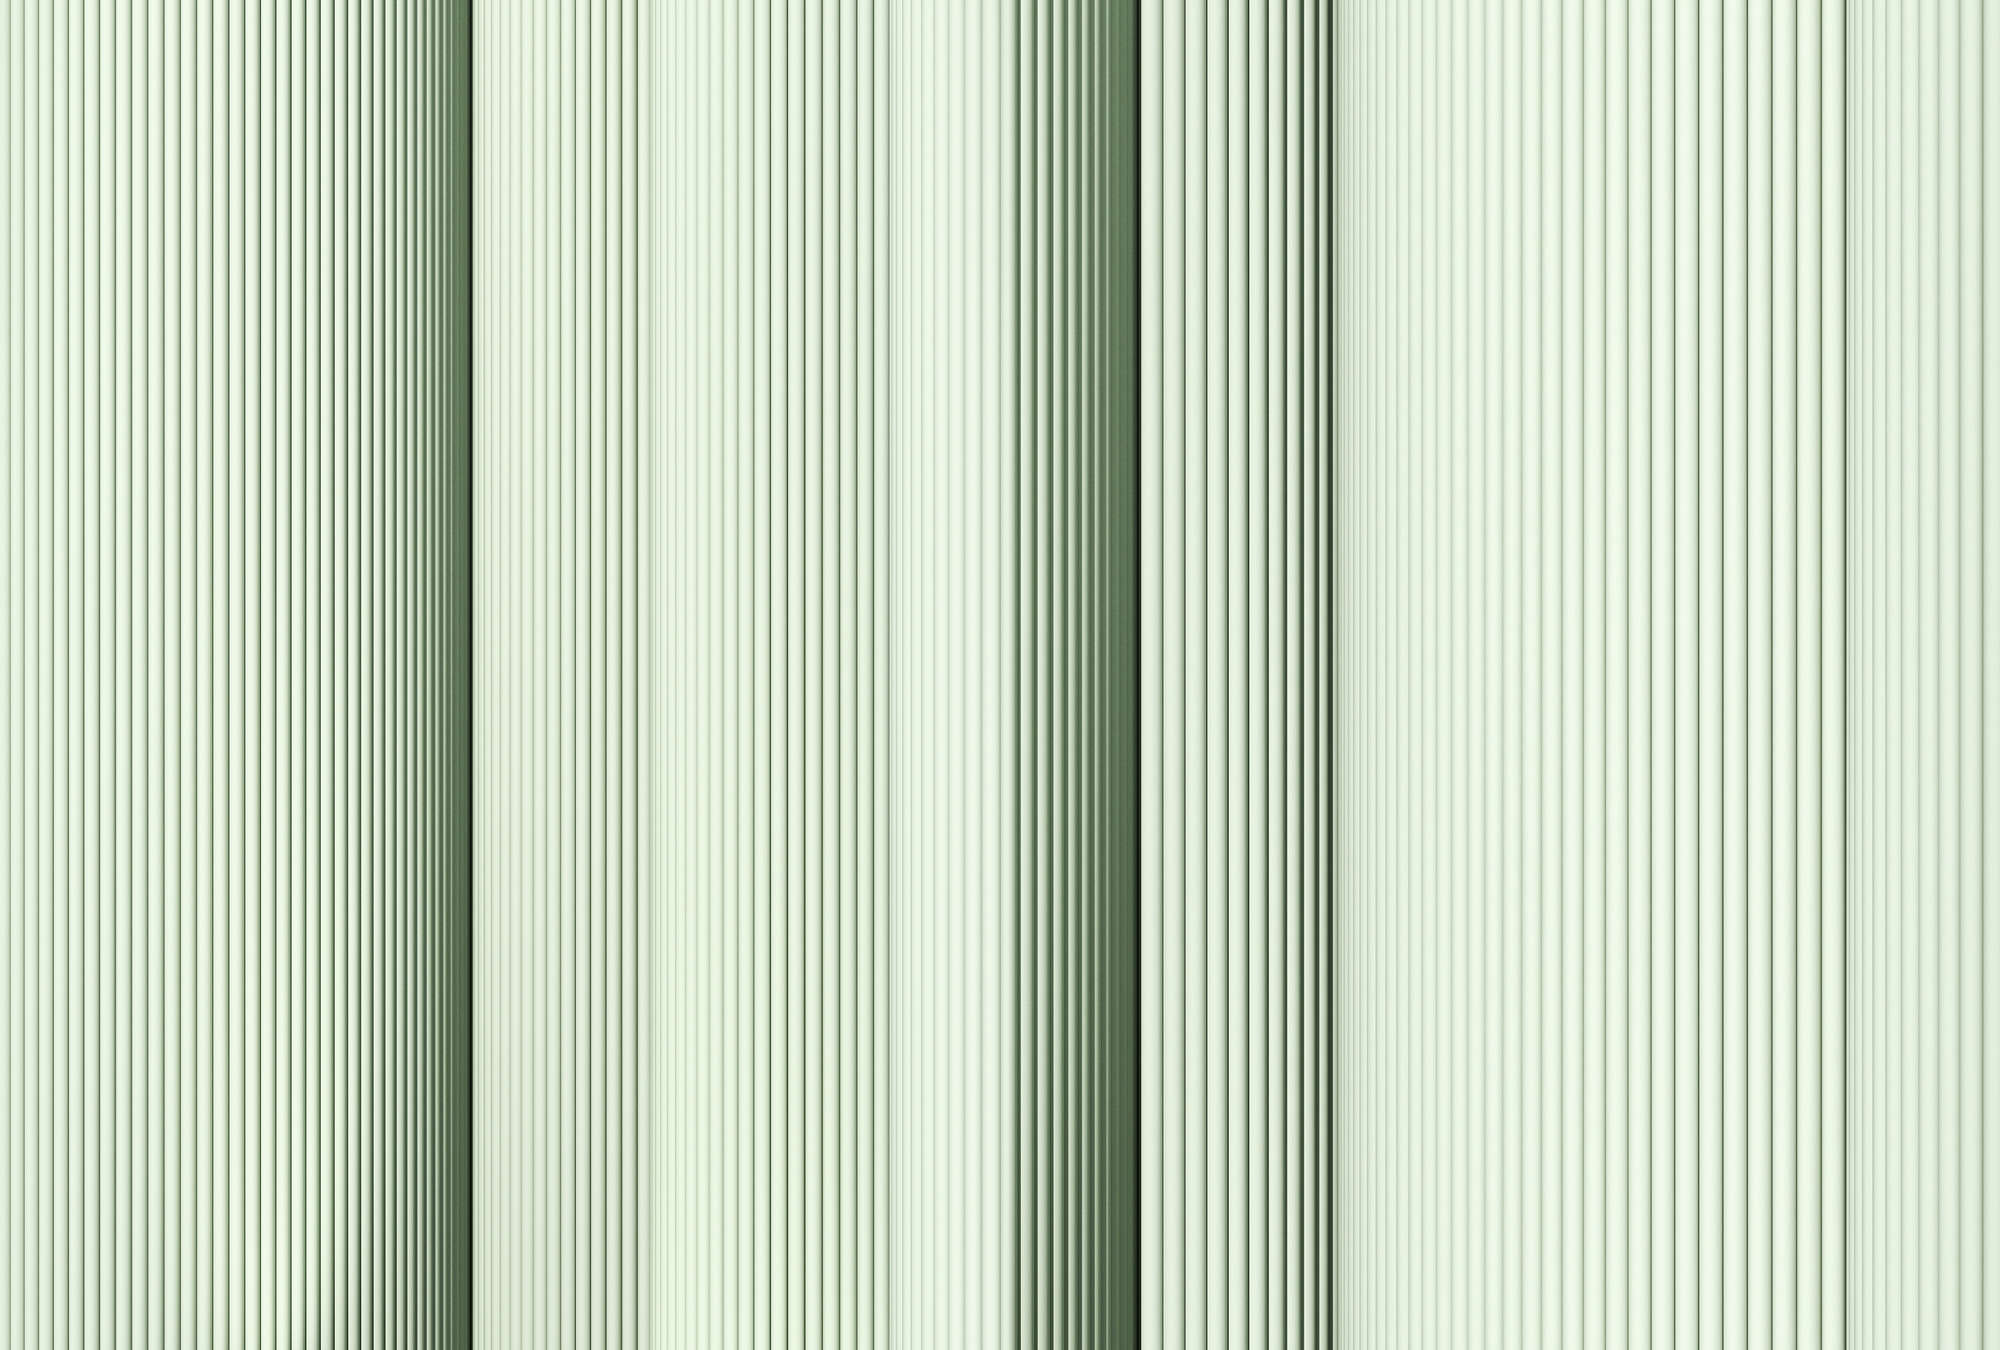             Magic Wall 2 – Grüne Streifen Fototapete mit 3D Illusion Effekt
        